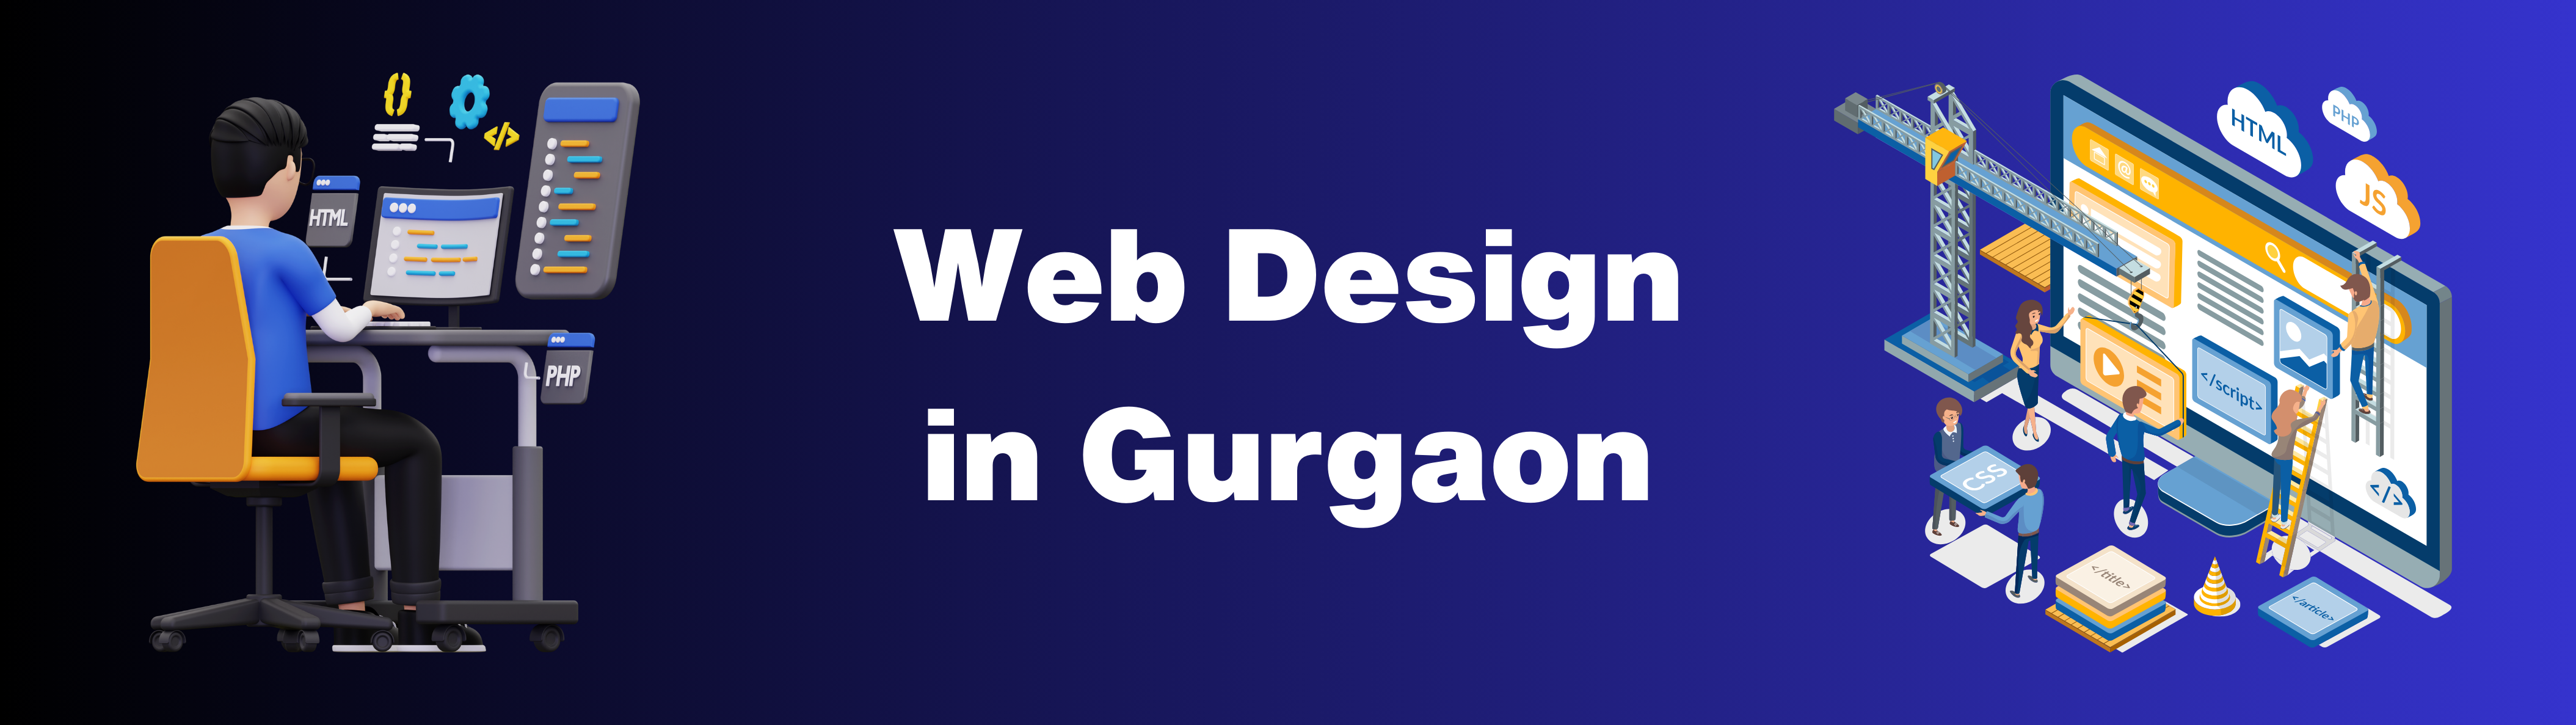 Web Design in Gurgaon